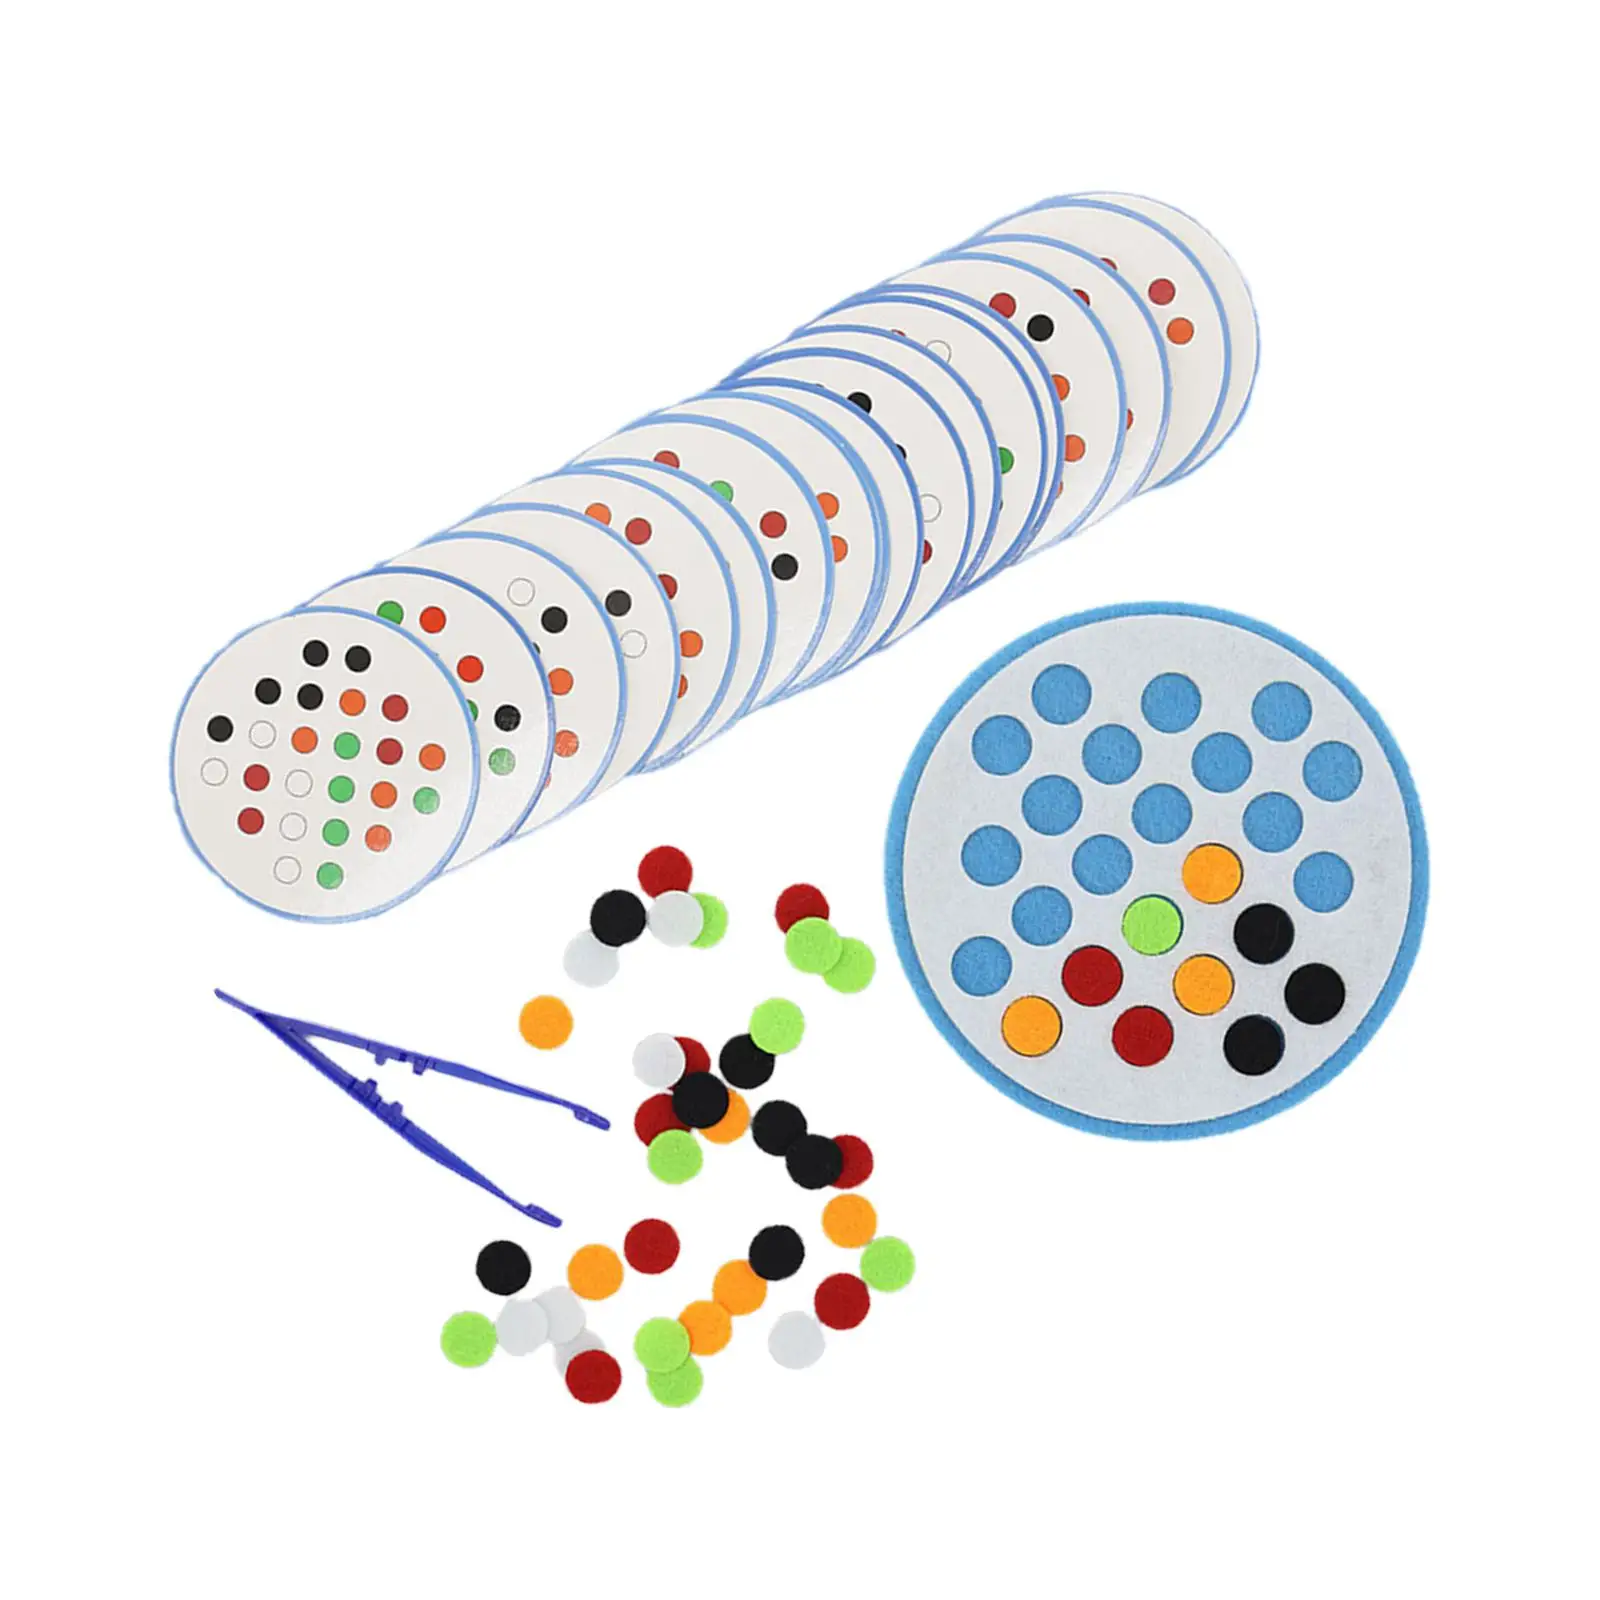 Color Sort Game Multipurpose for Family Kindergarten Learning Activities